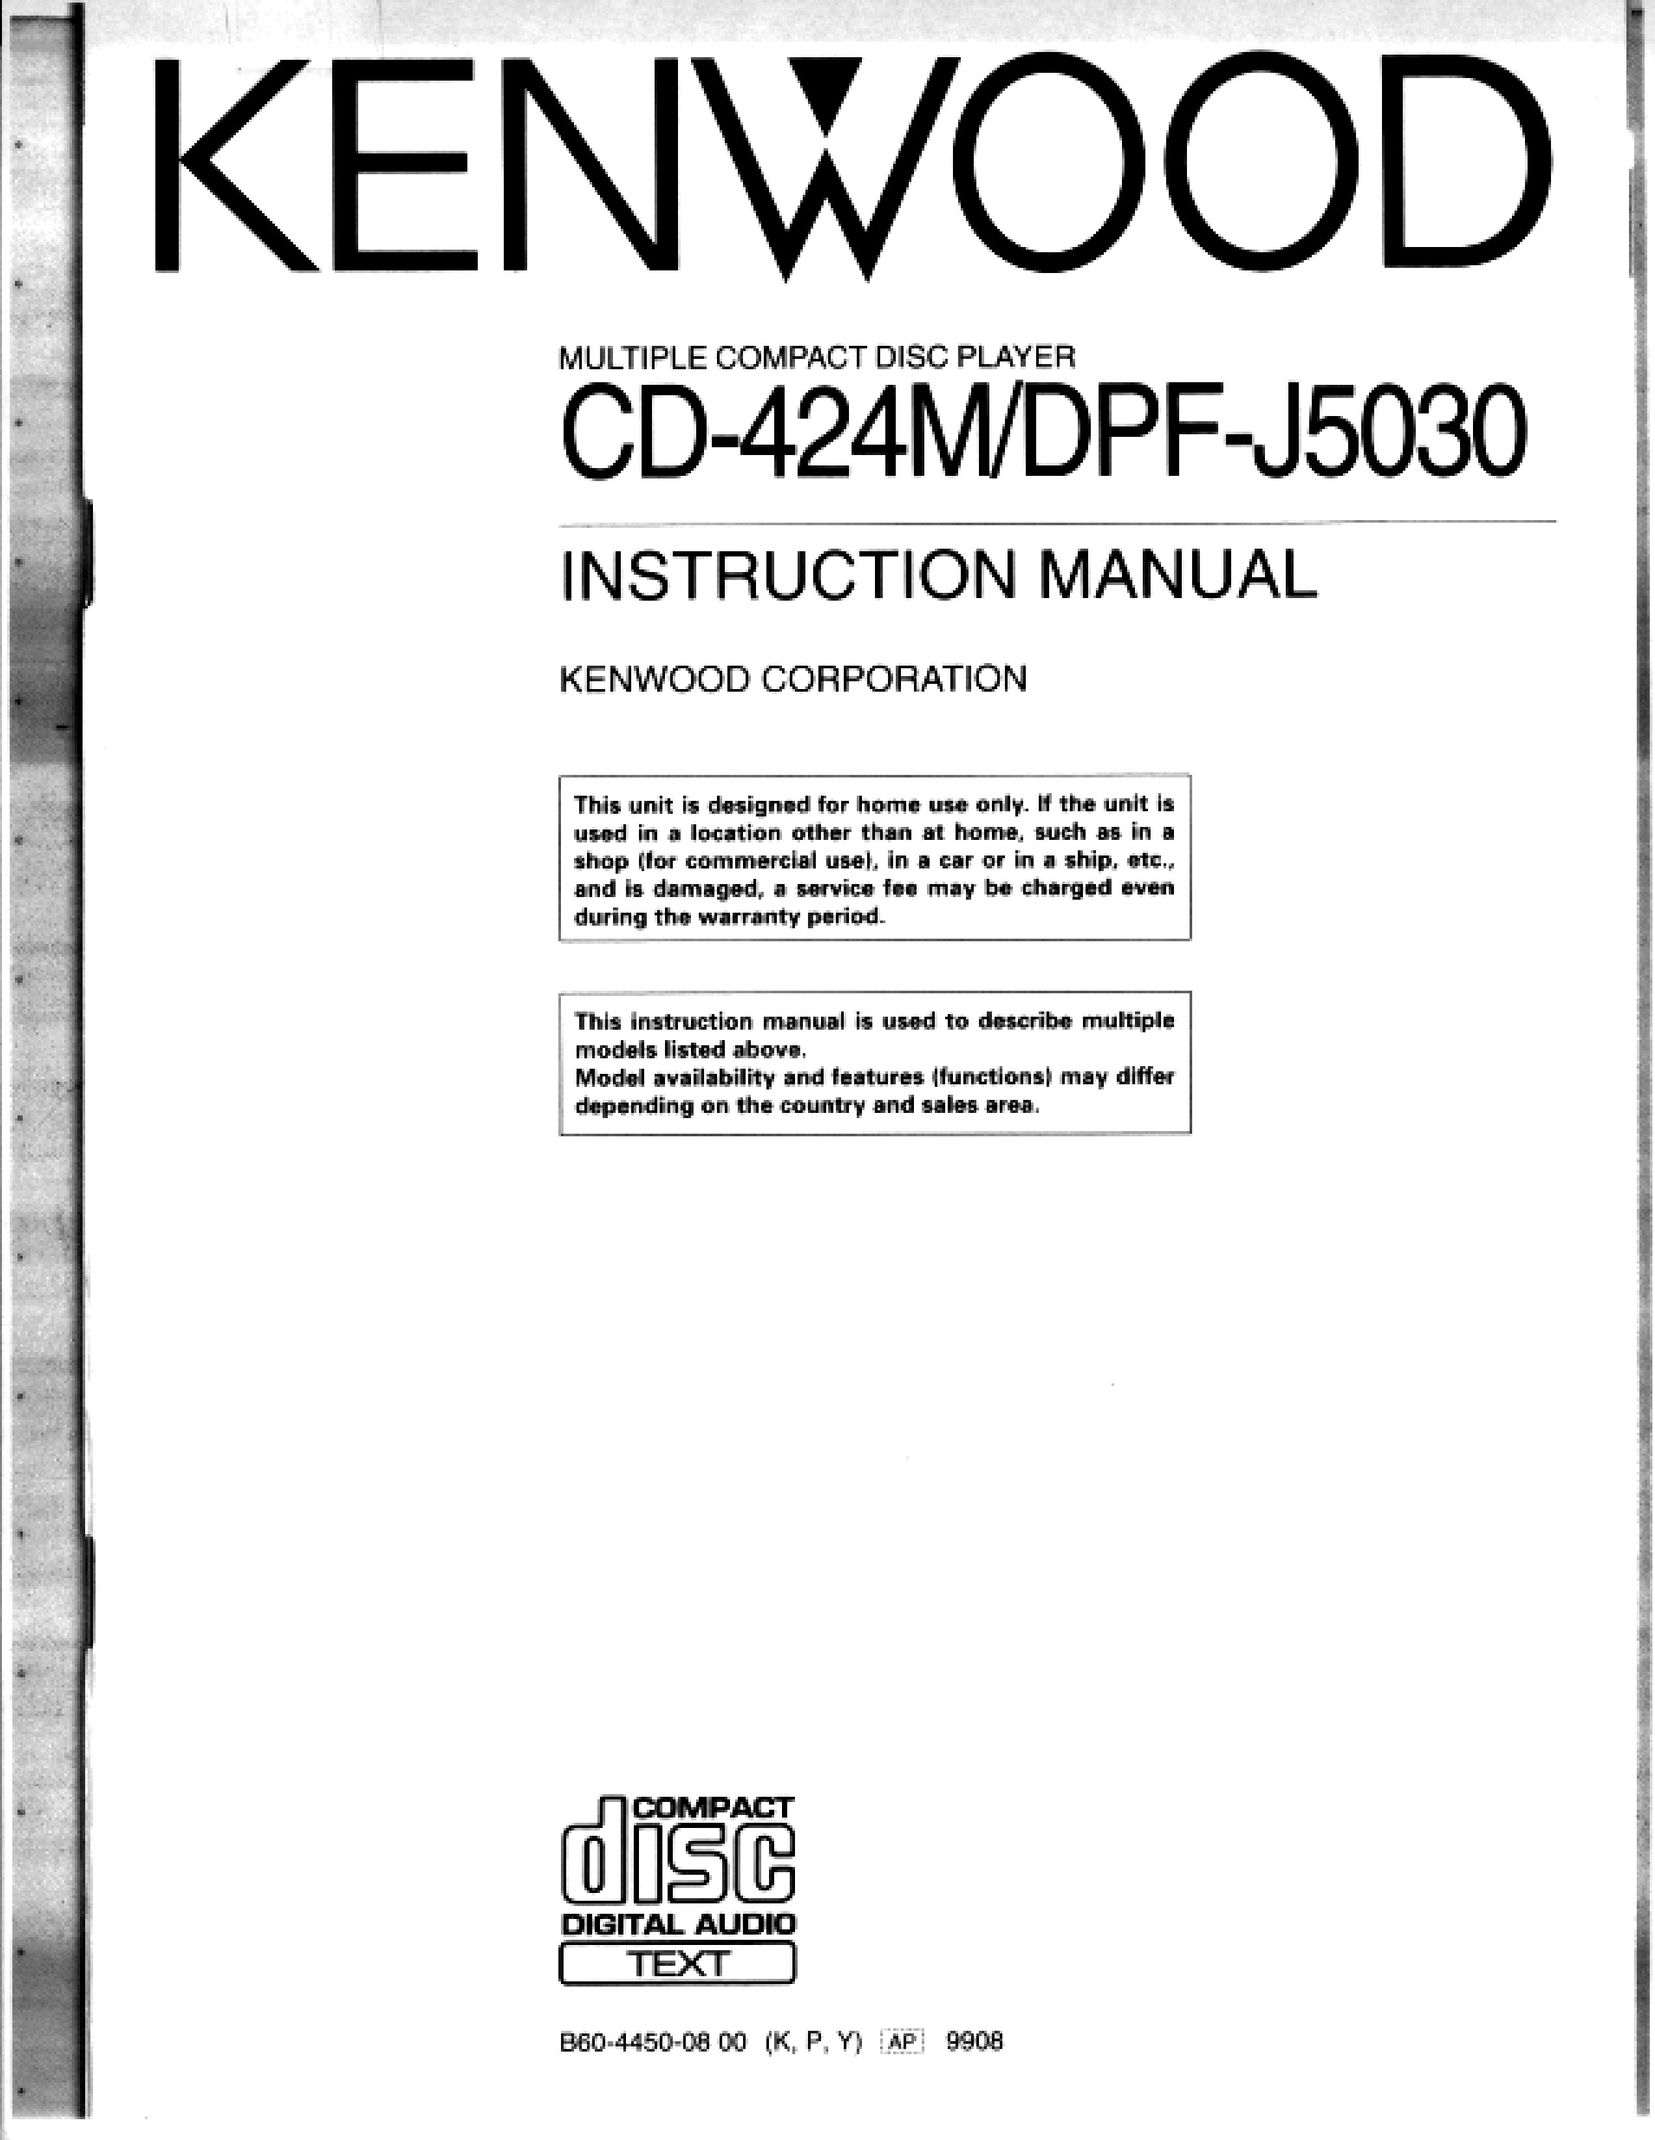 Kenwood CD-424M CD Player User Manual